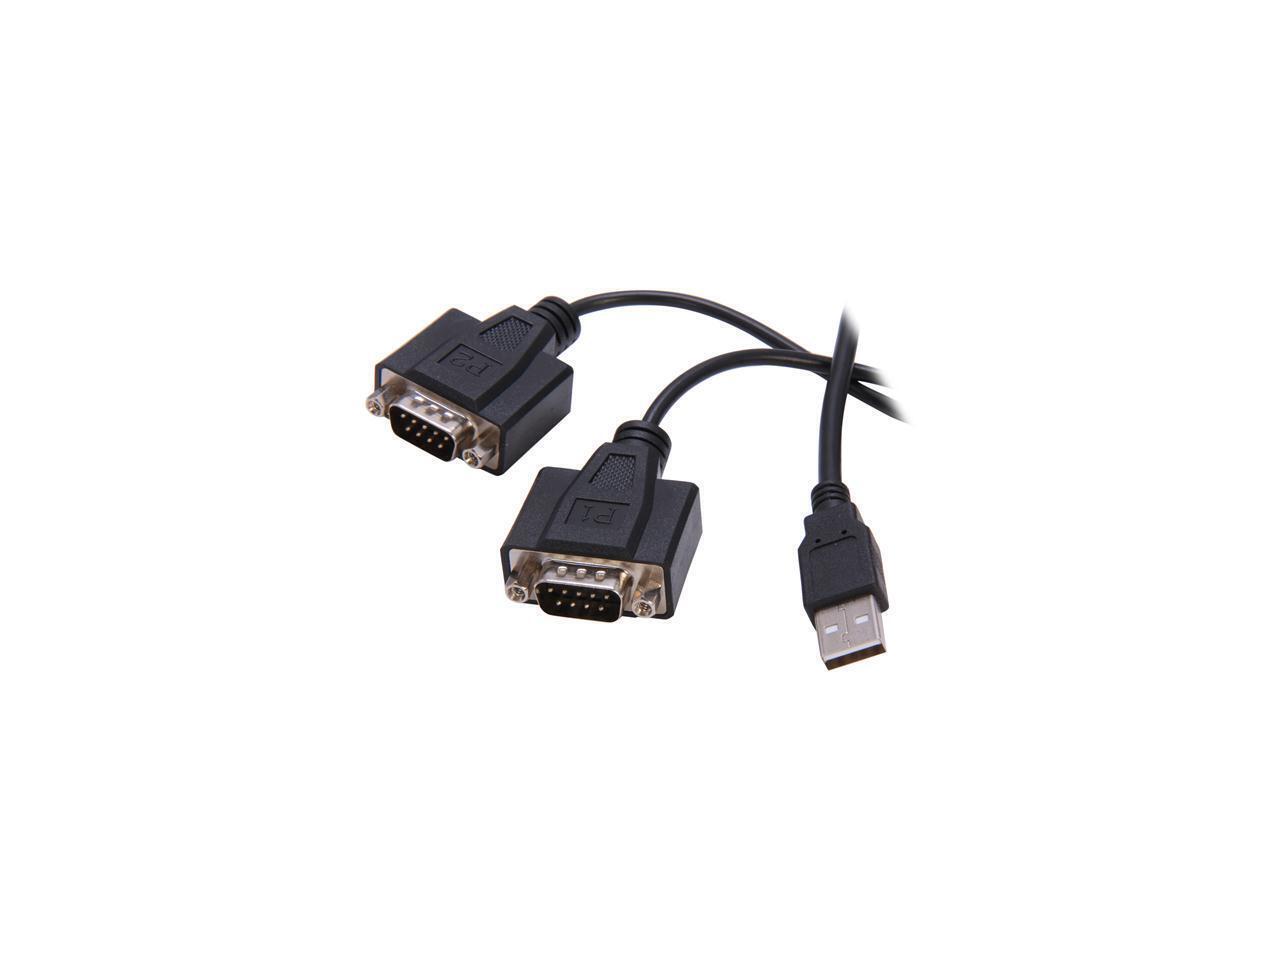 StarTech.com Model ICUSB2322F 6 ft. 2 Port FTDI USB to Serial RS232 Adapter